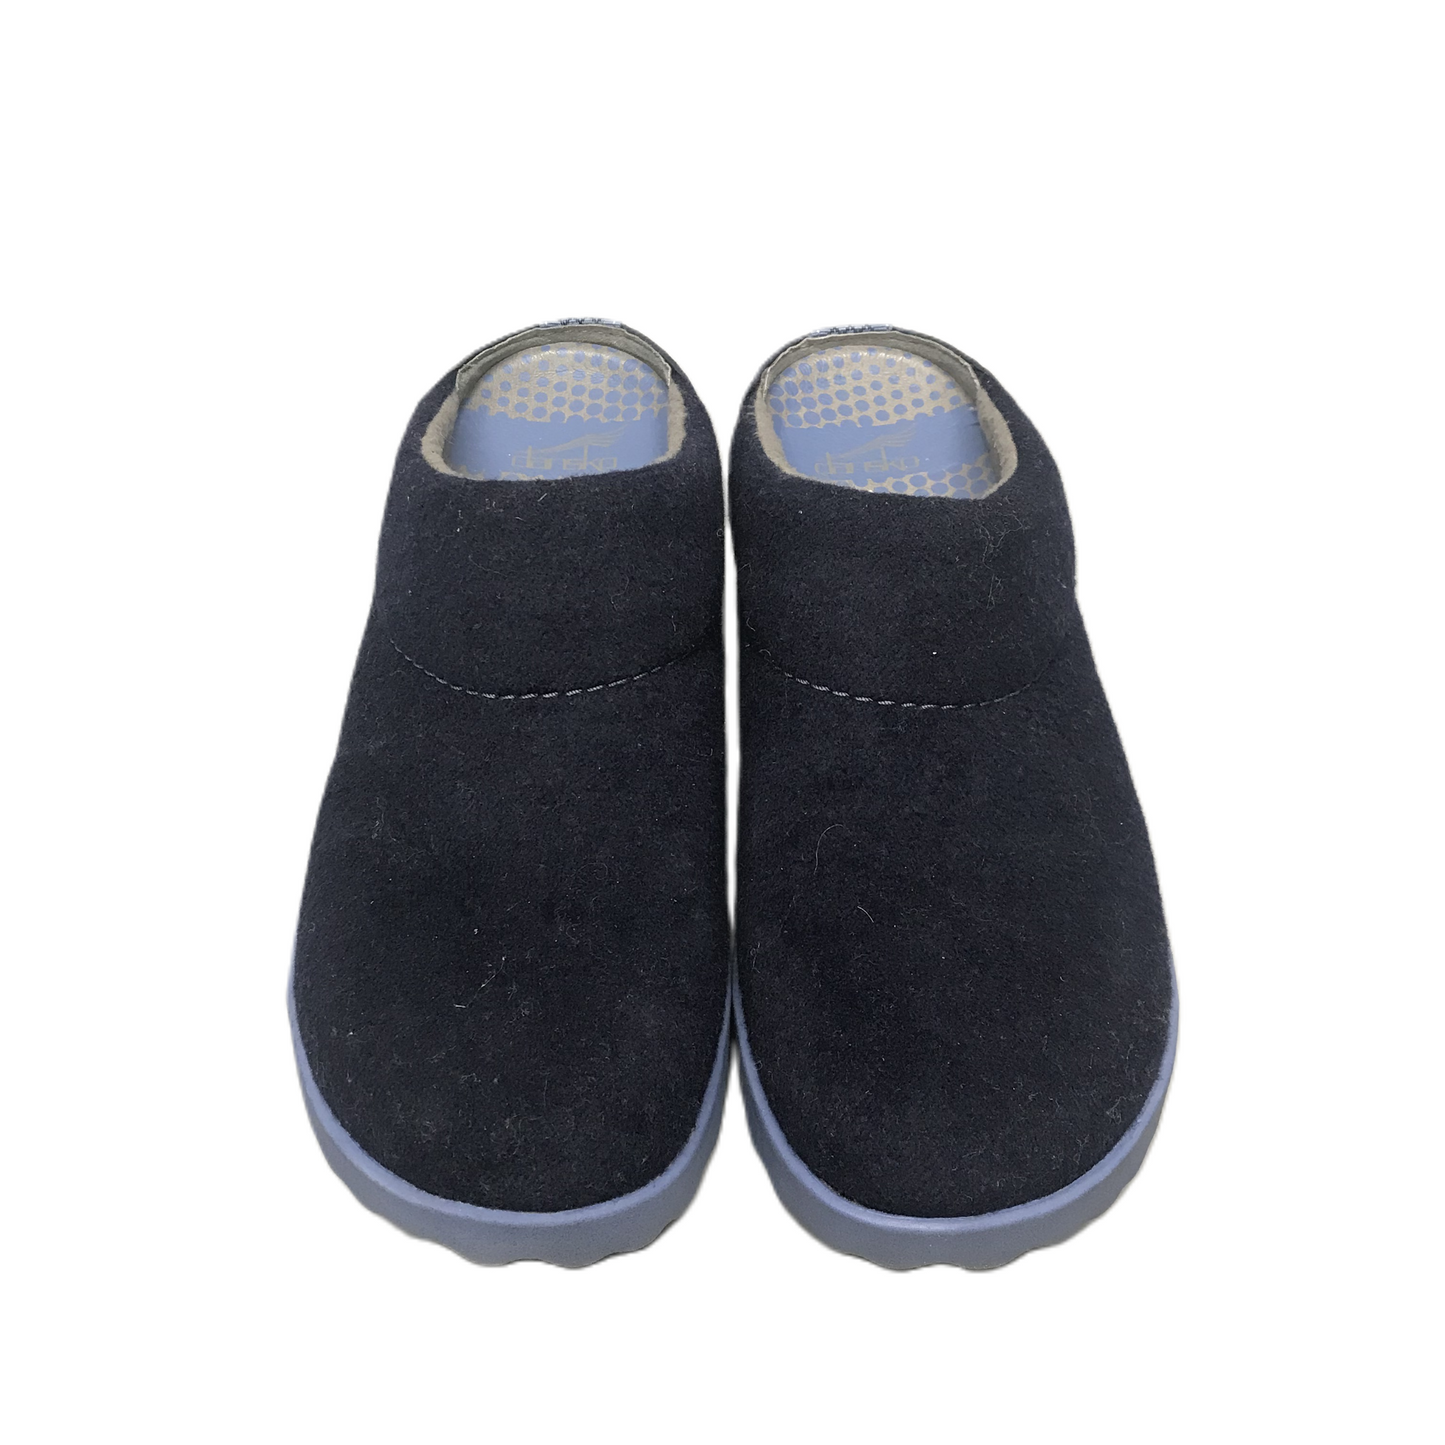 Blue Shoes Flats By Dansko, Size: 9.5